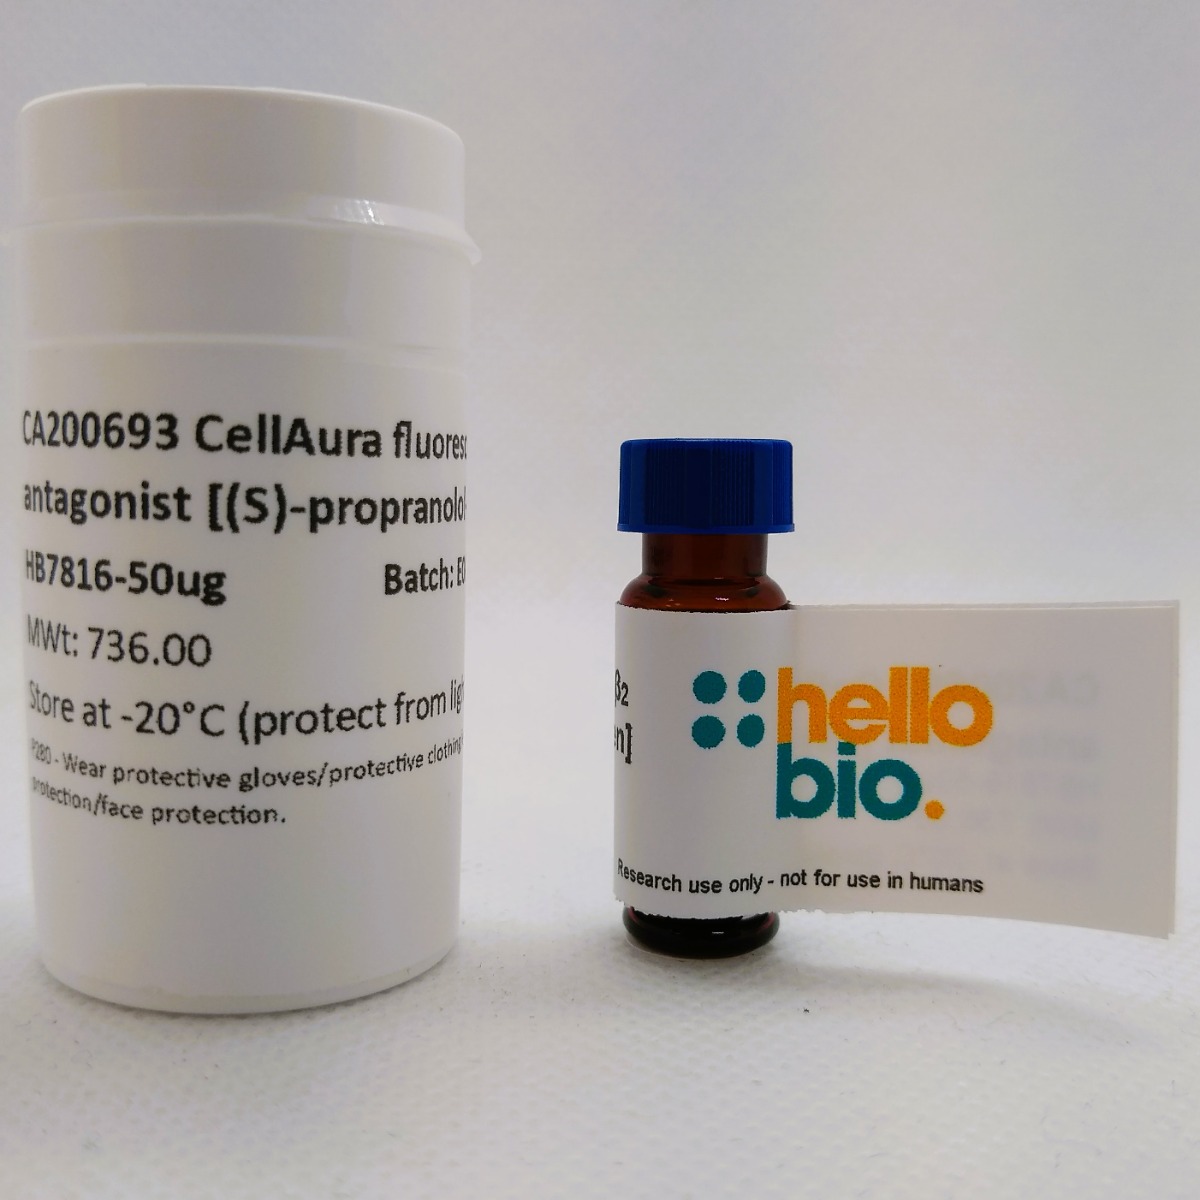 CellAura fluorescent β2 antagonist [(S)-propranolol-green] product vial image | Hello Bio